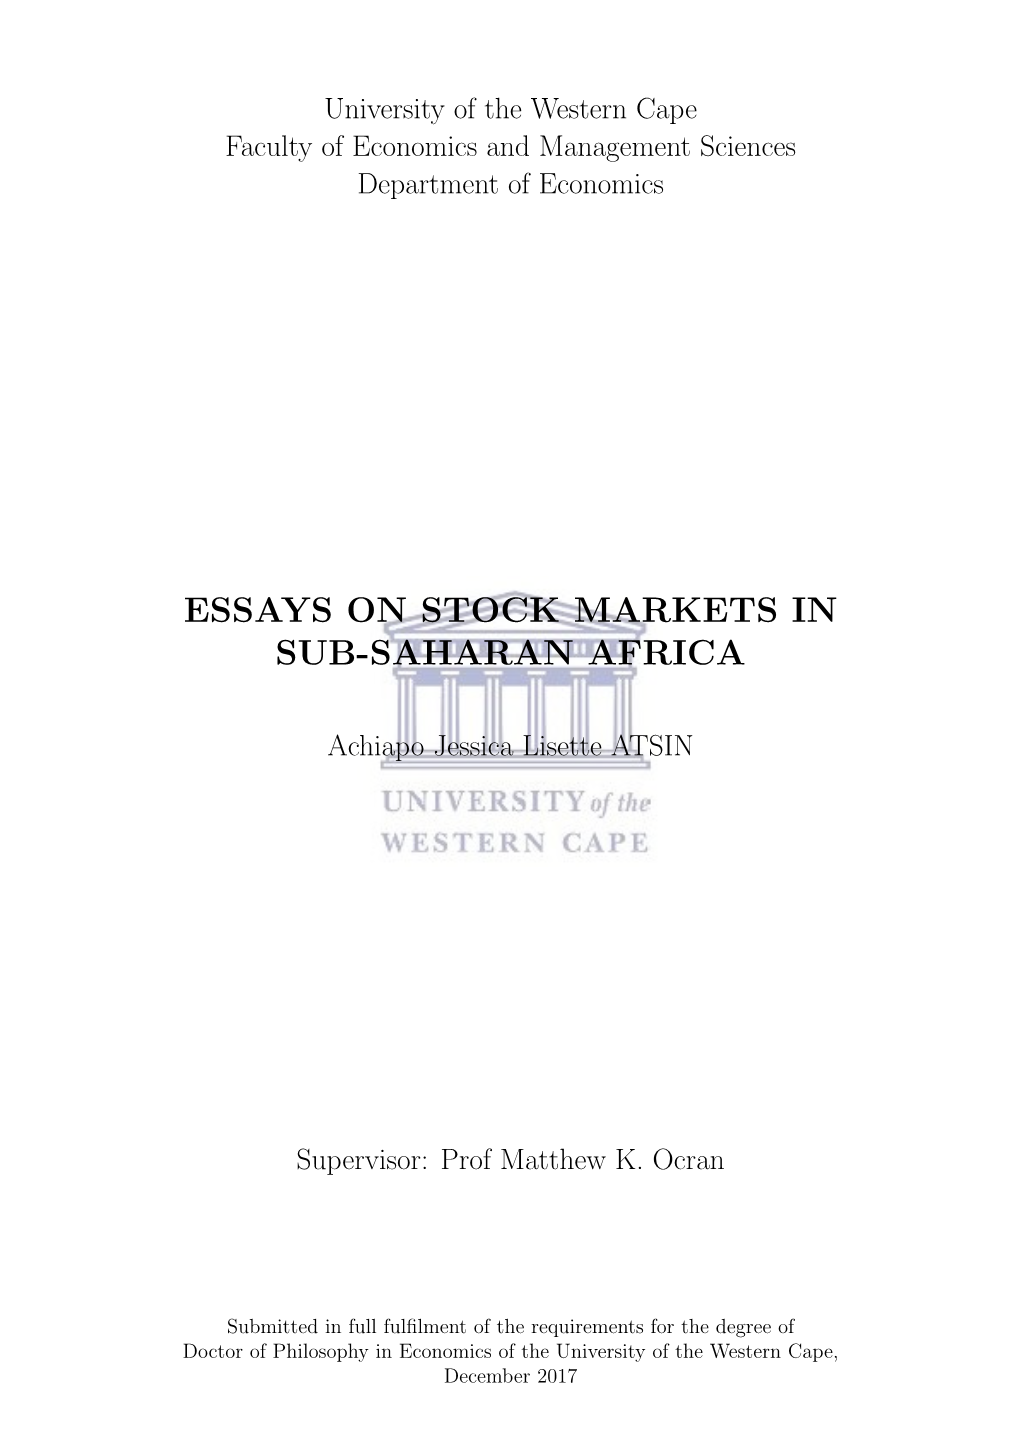 Essays on Stock Markets in Sub-Saharan Africa